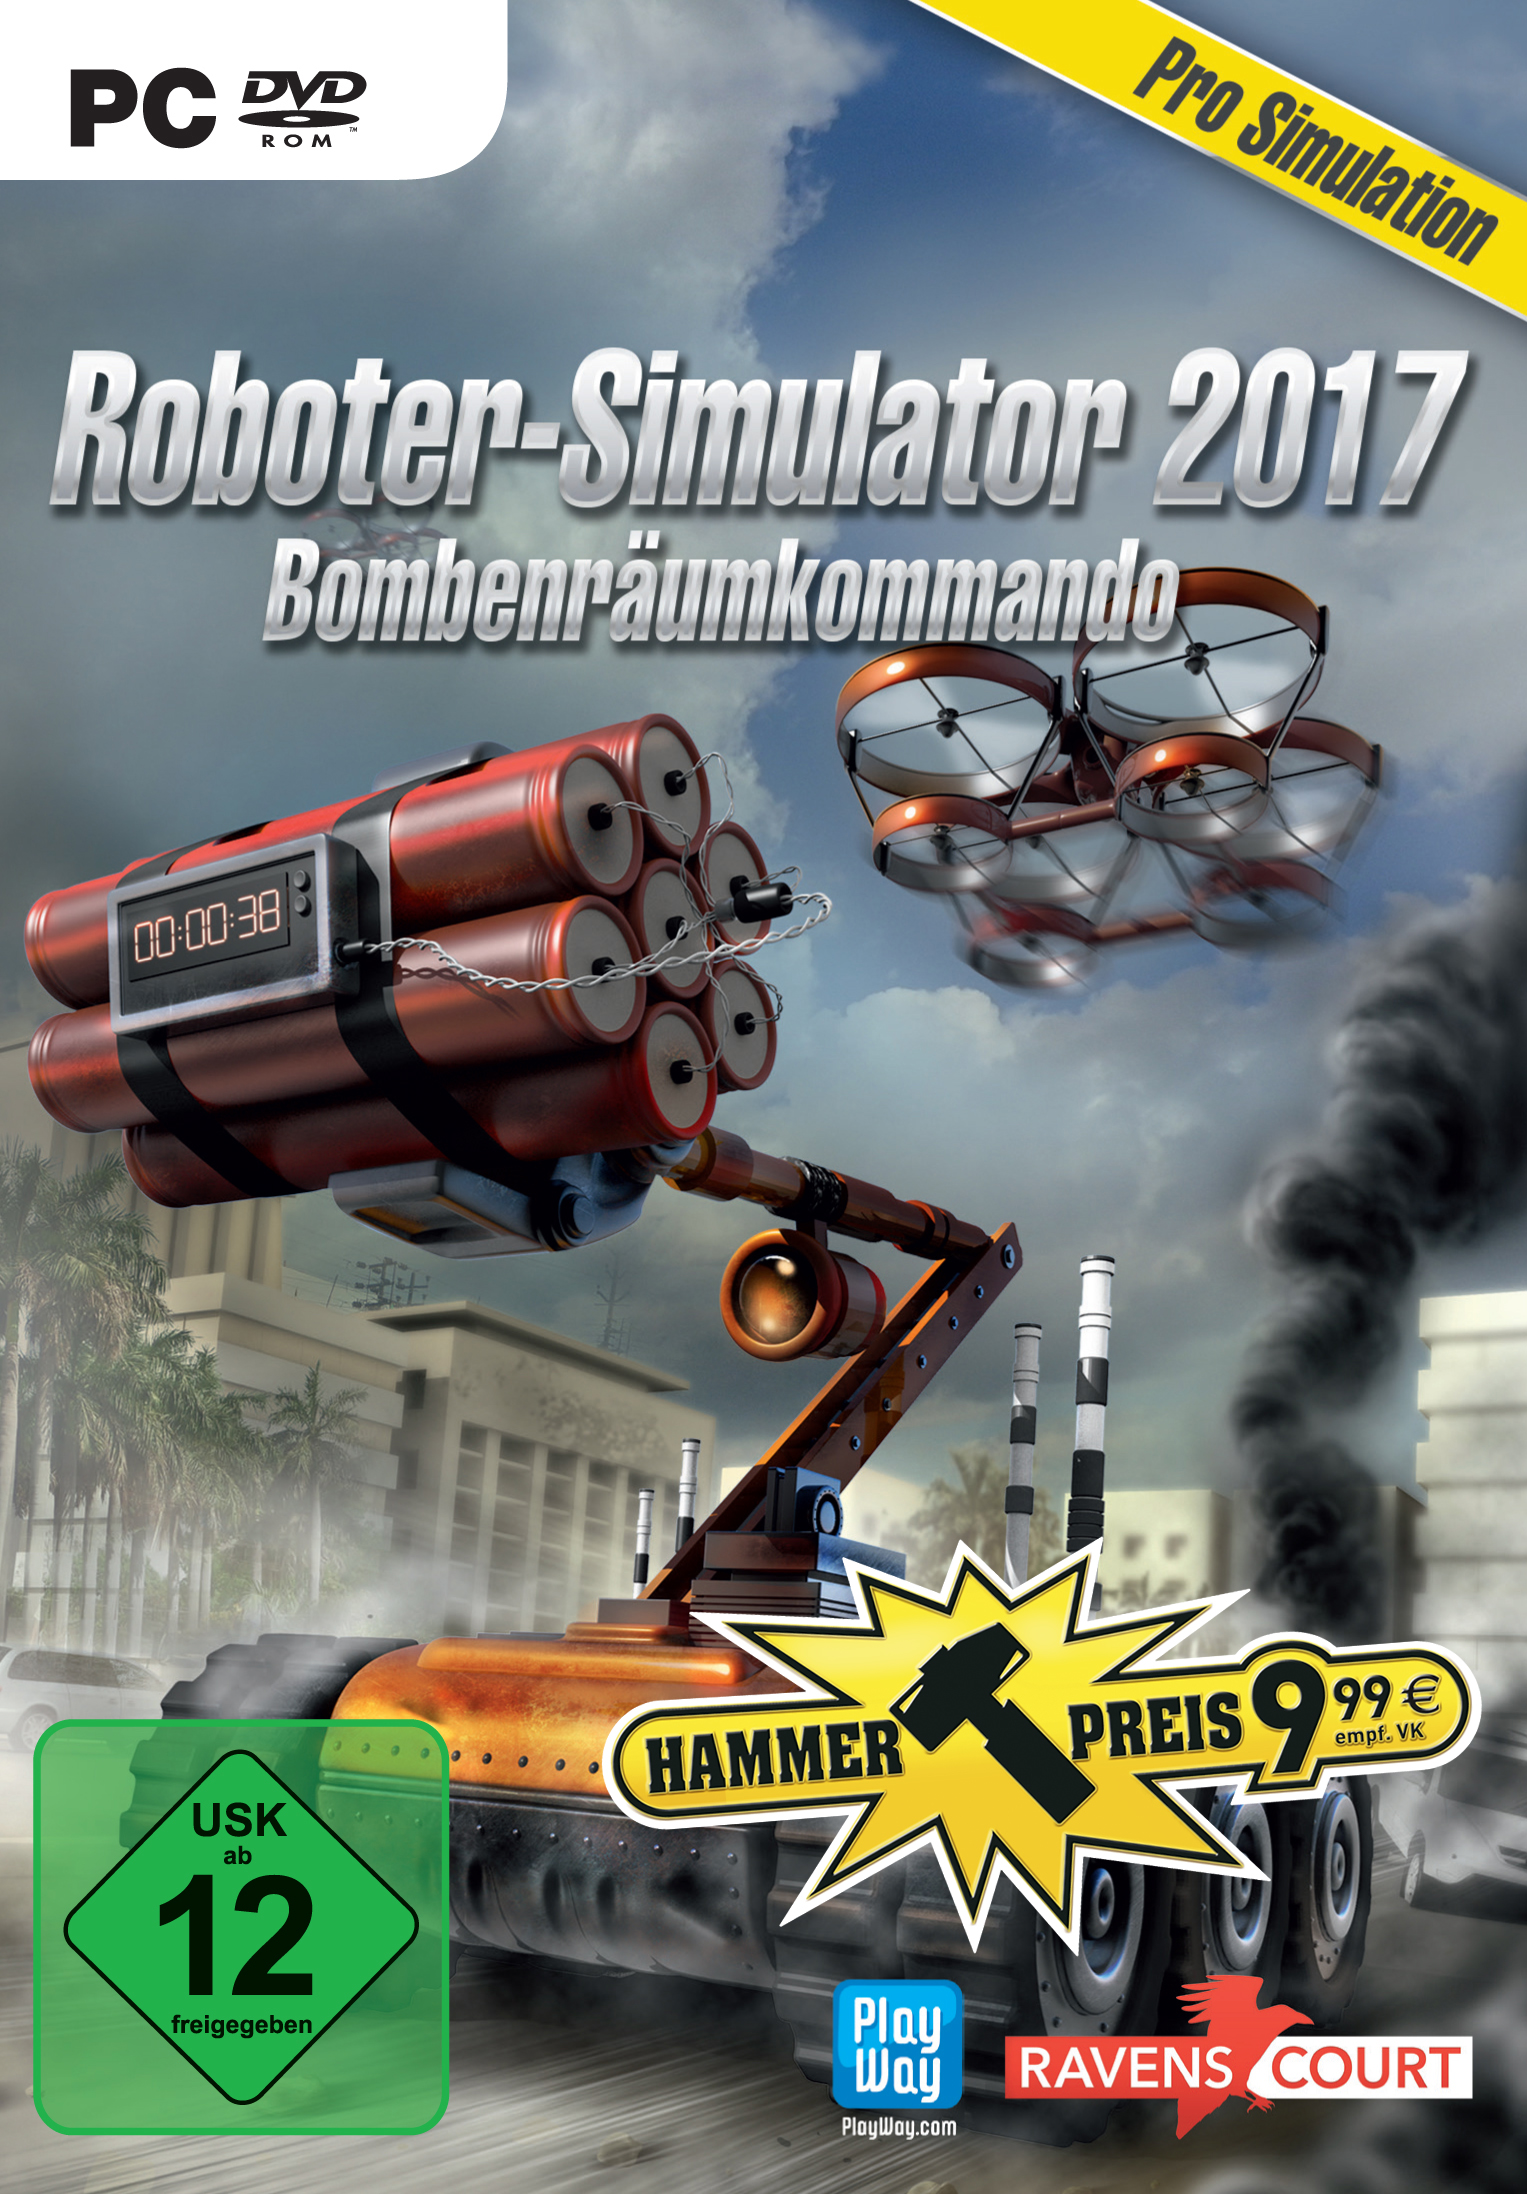 (PC) - 2017: Bombenräumkommando Roboter-Simulator [PC]